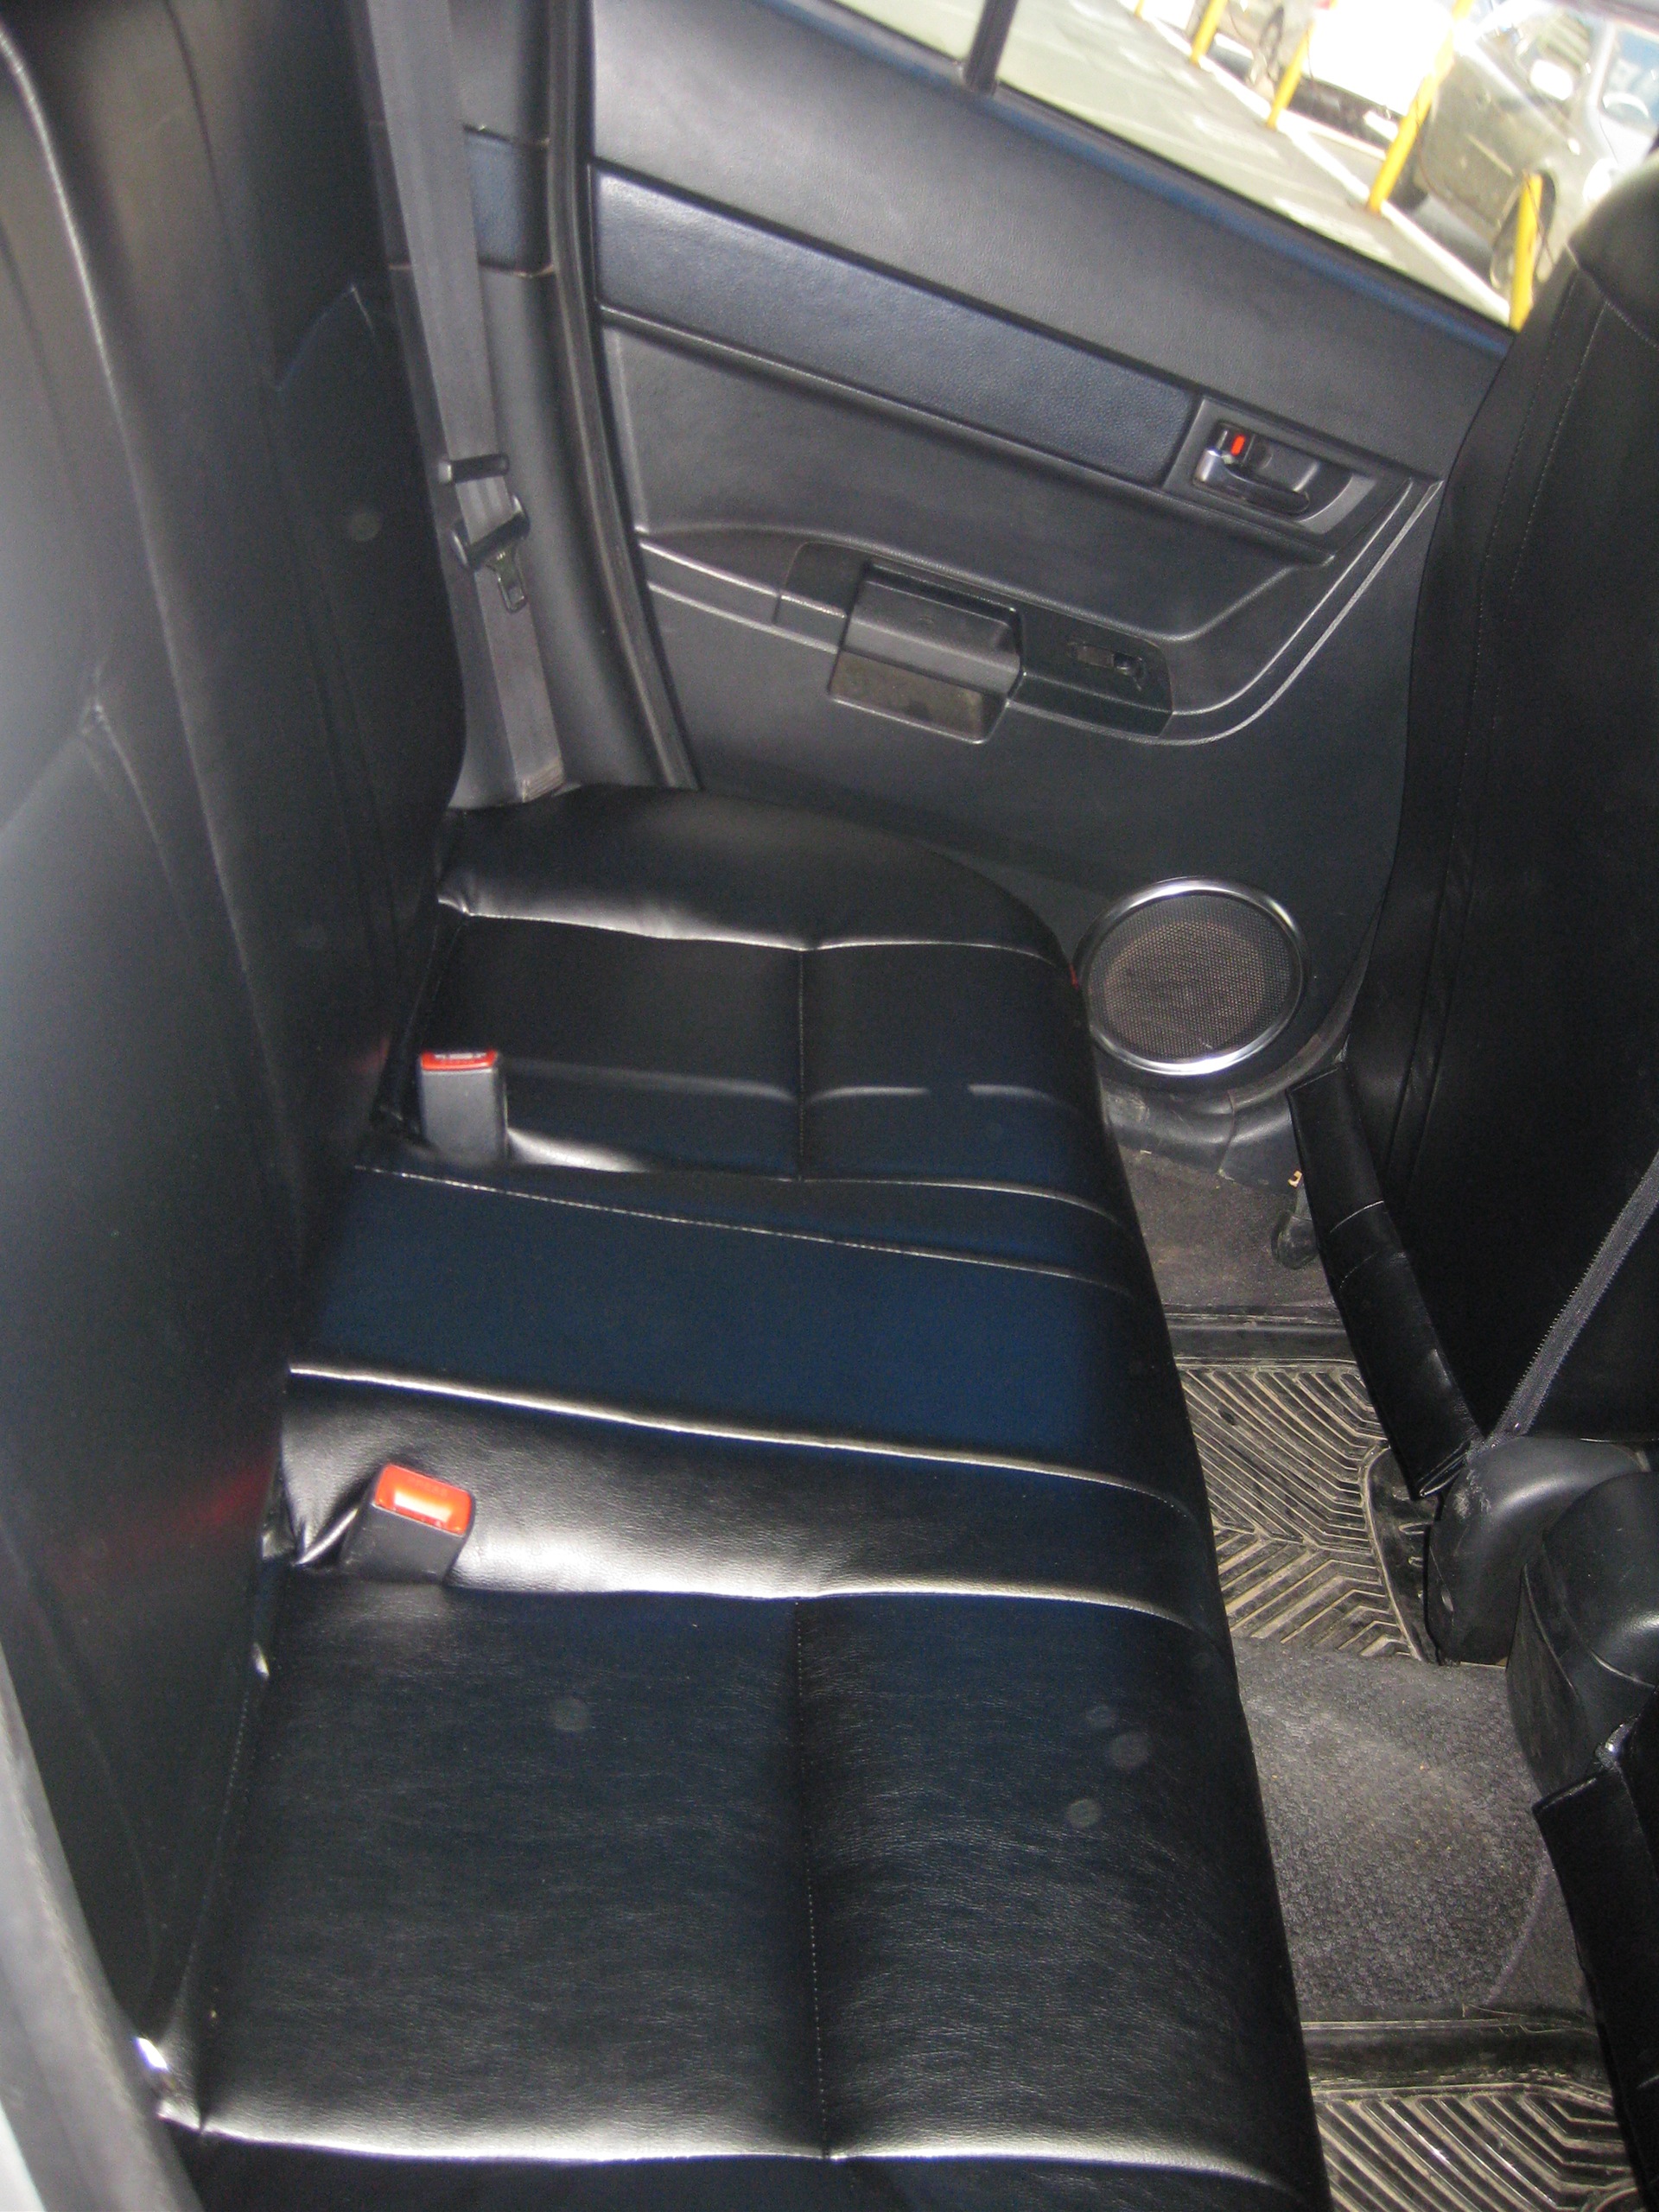 Interior upholstery - Toyota Will VS 18 L 2002